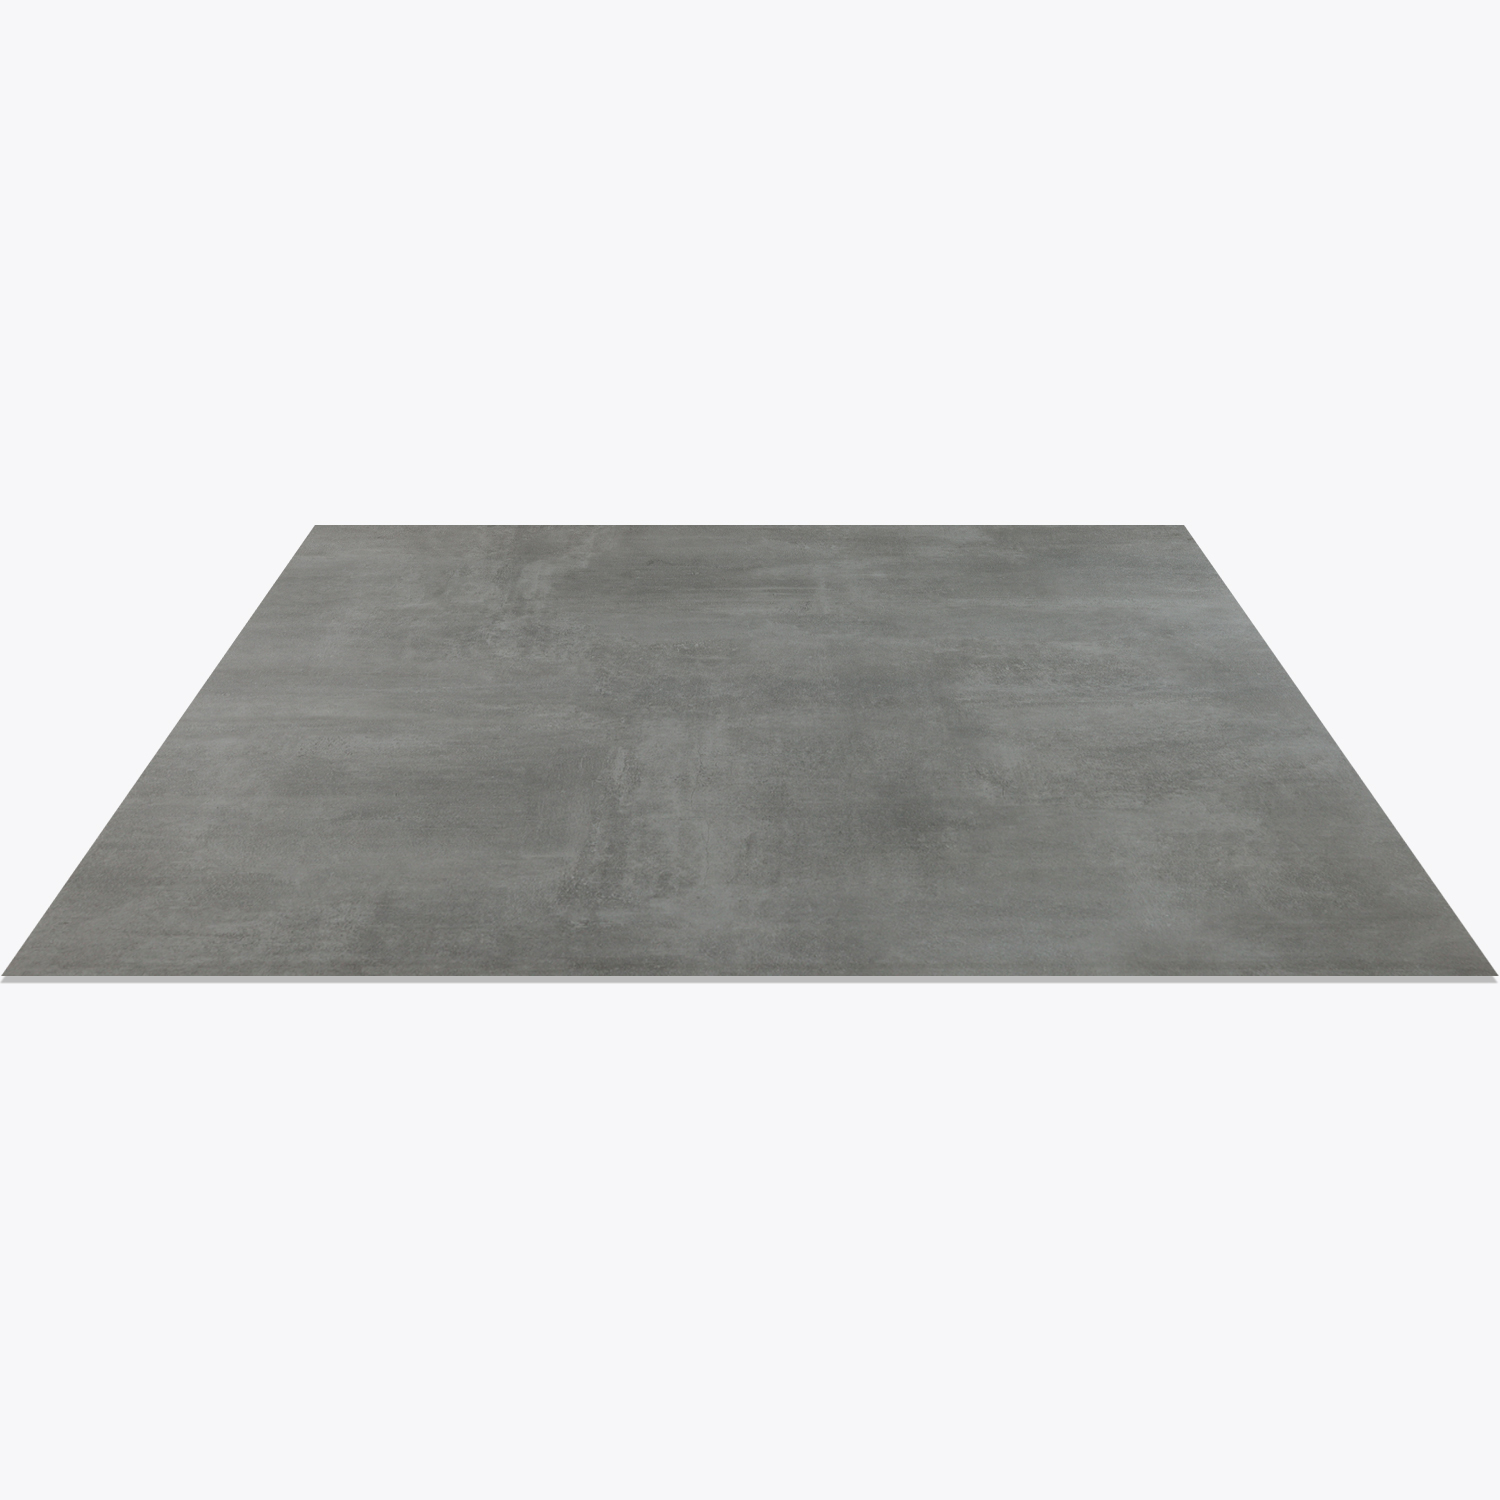 Pavimento New York gres porcellanato 120x120cm grigio opaco